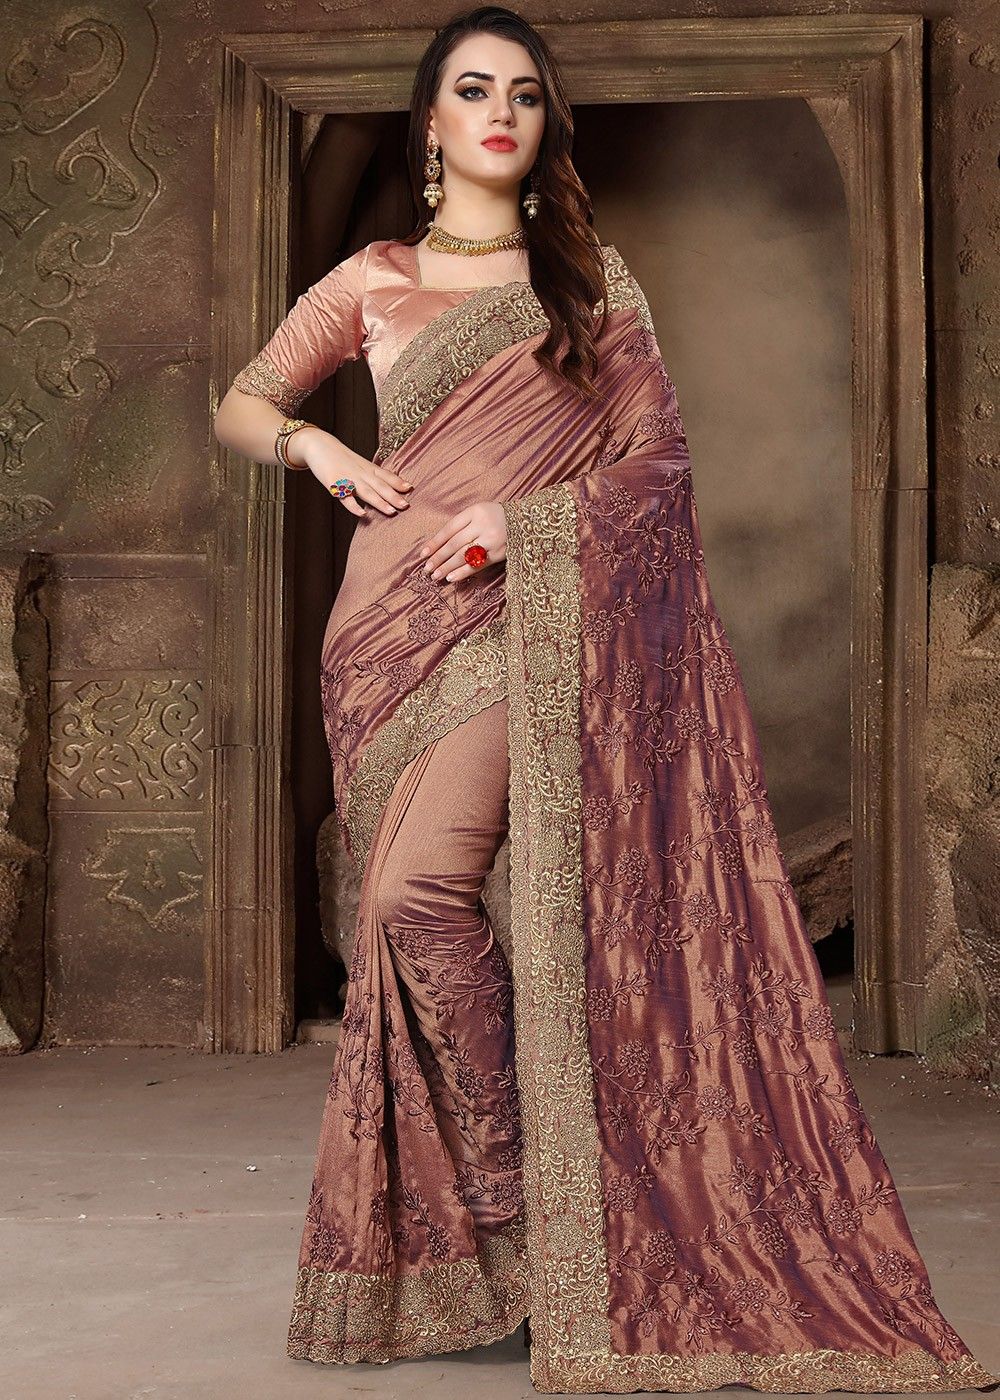 Details more than 81 brown colour saree latest